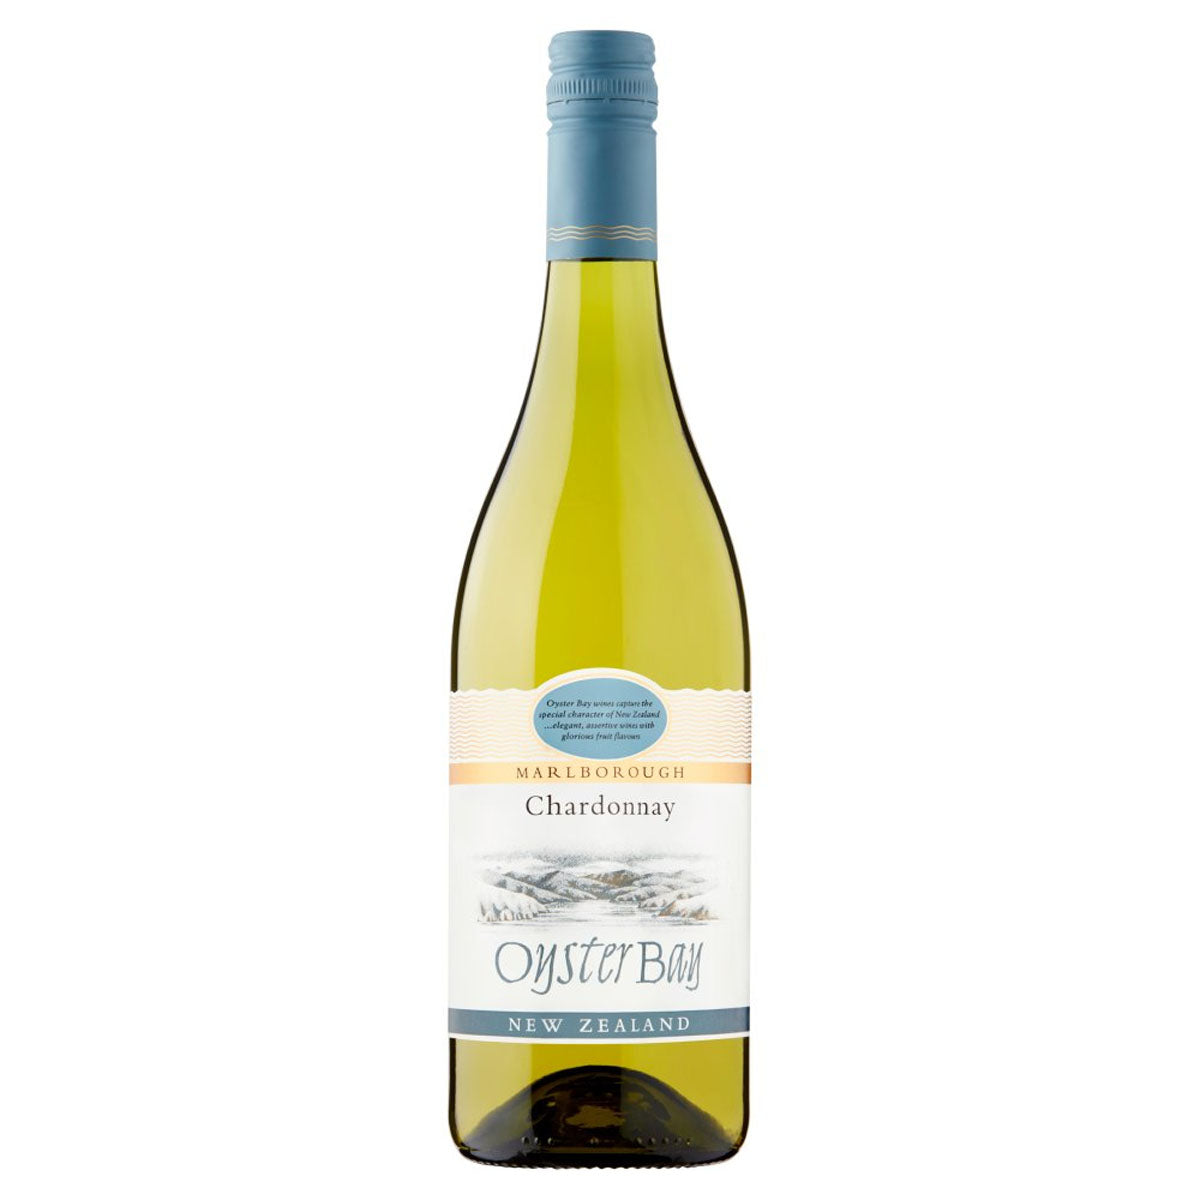 A bottle of Oyster Bay - Marlborough Chardonnay (13.0% ABV) - 750ml on a white background.